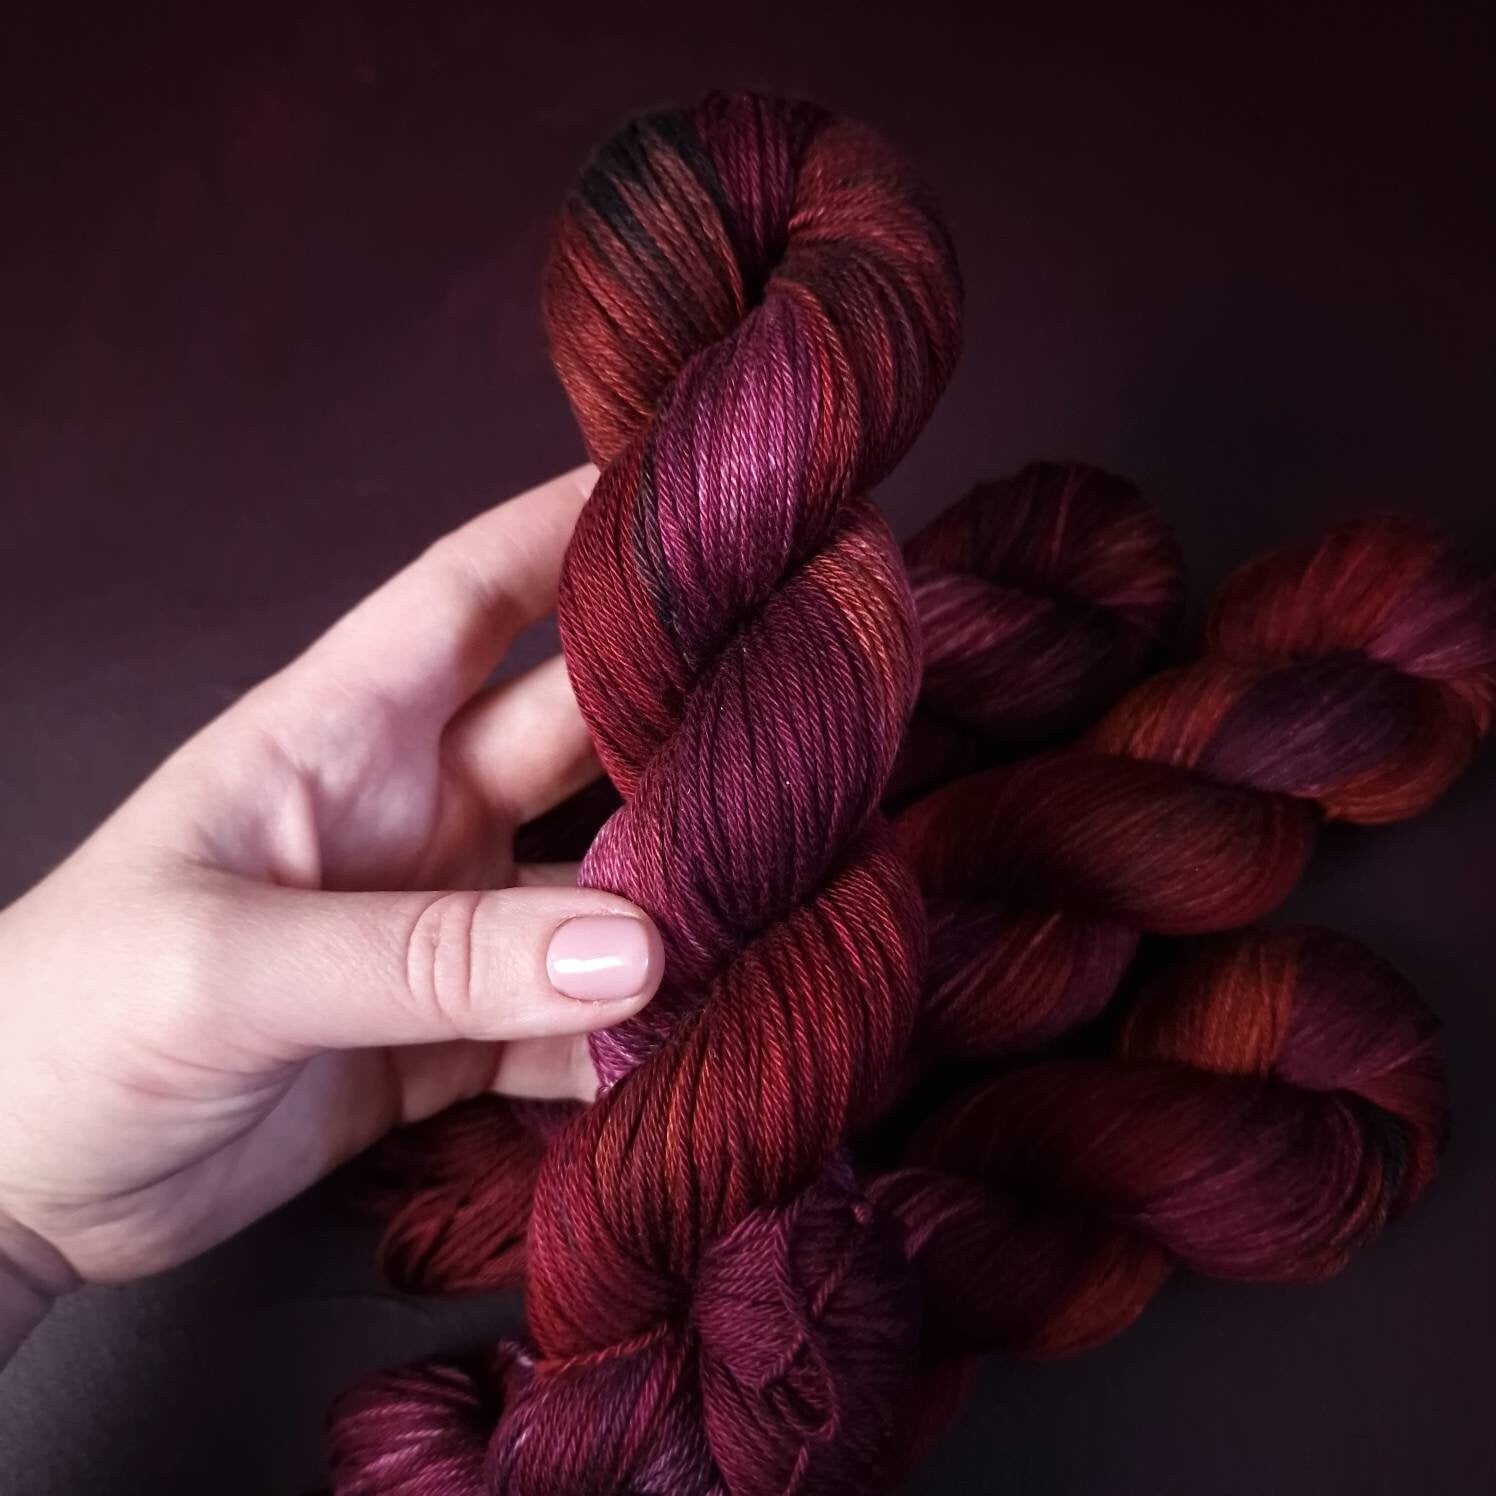 Hand dyed yarn ~ Wildberry Tea ~ mercerized cotton yarn, vegan, hand painted, indie dyed